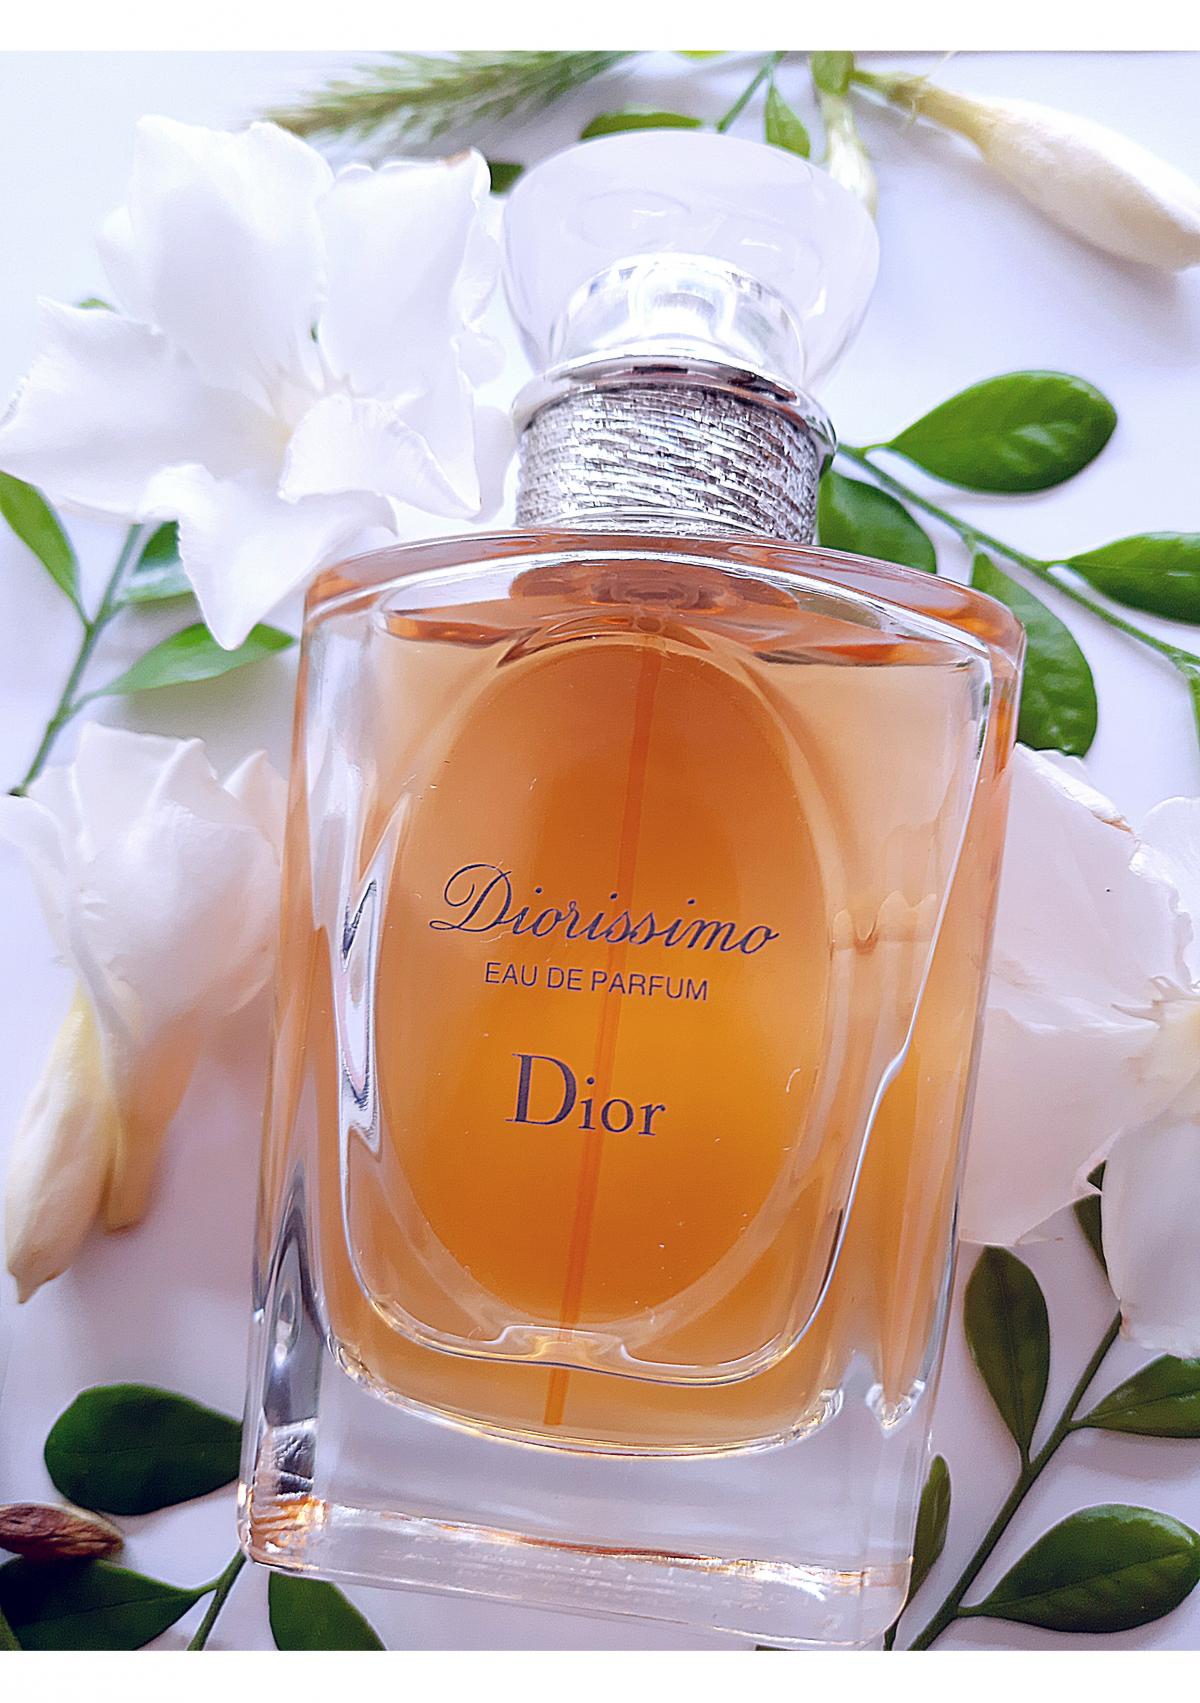 Les Creations de Monsieur Dior Diorissimo Eau de Parfum Dior parfum